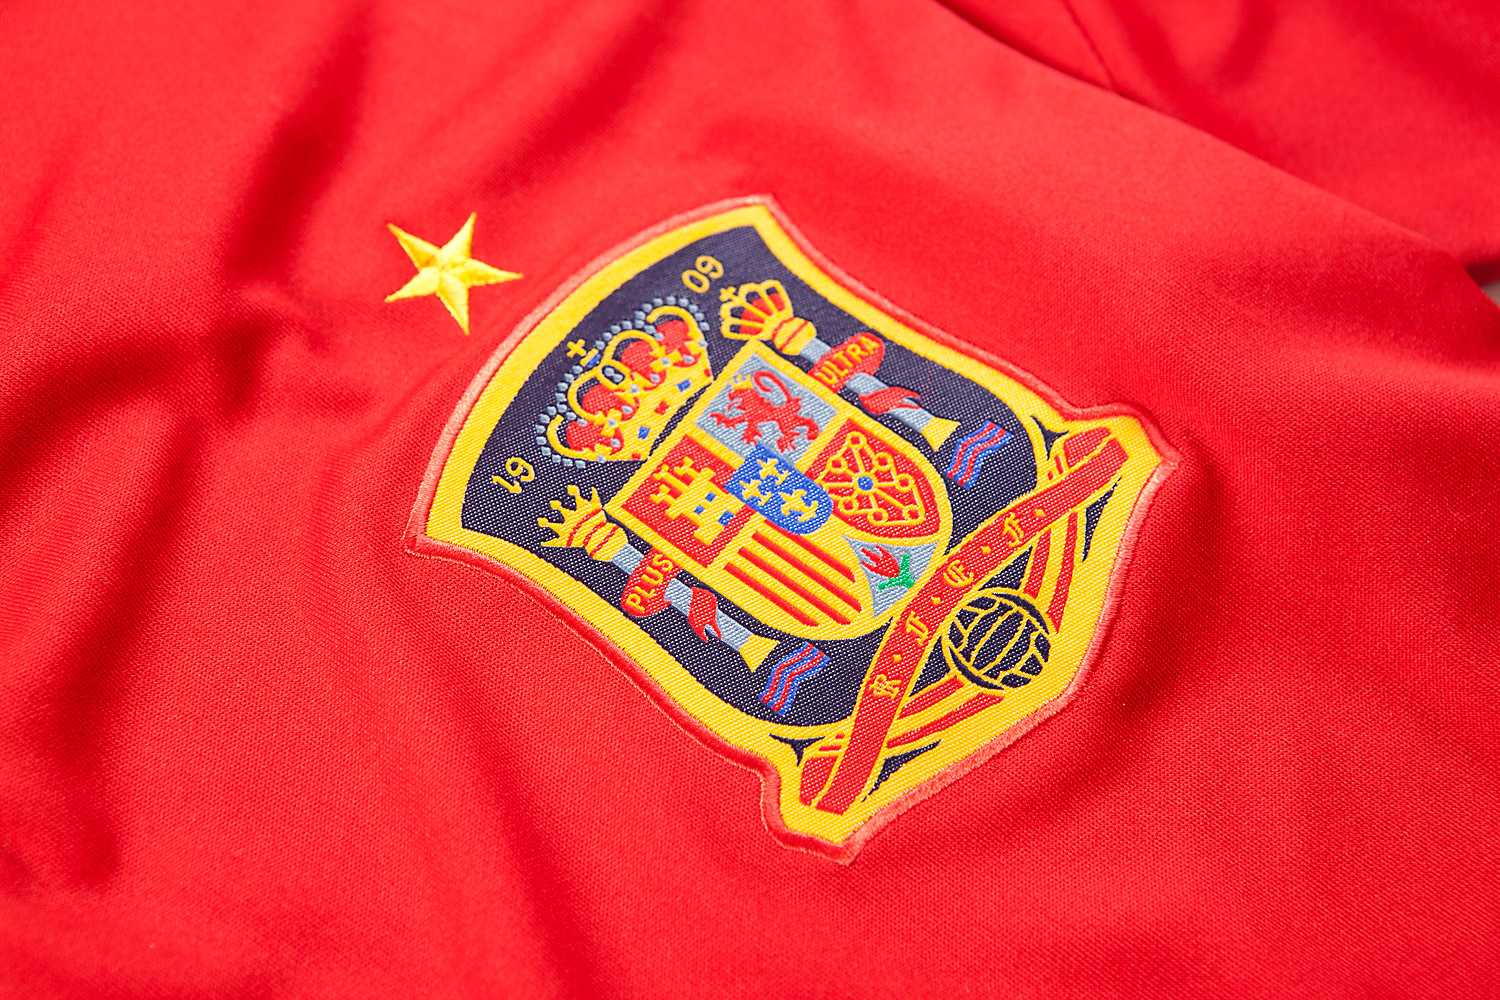 Replica camisetas del futbol2014-2015: Replica espana mundo de copa 2014 camisetas futbol